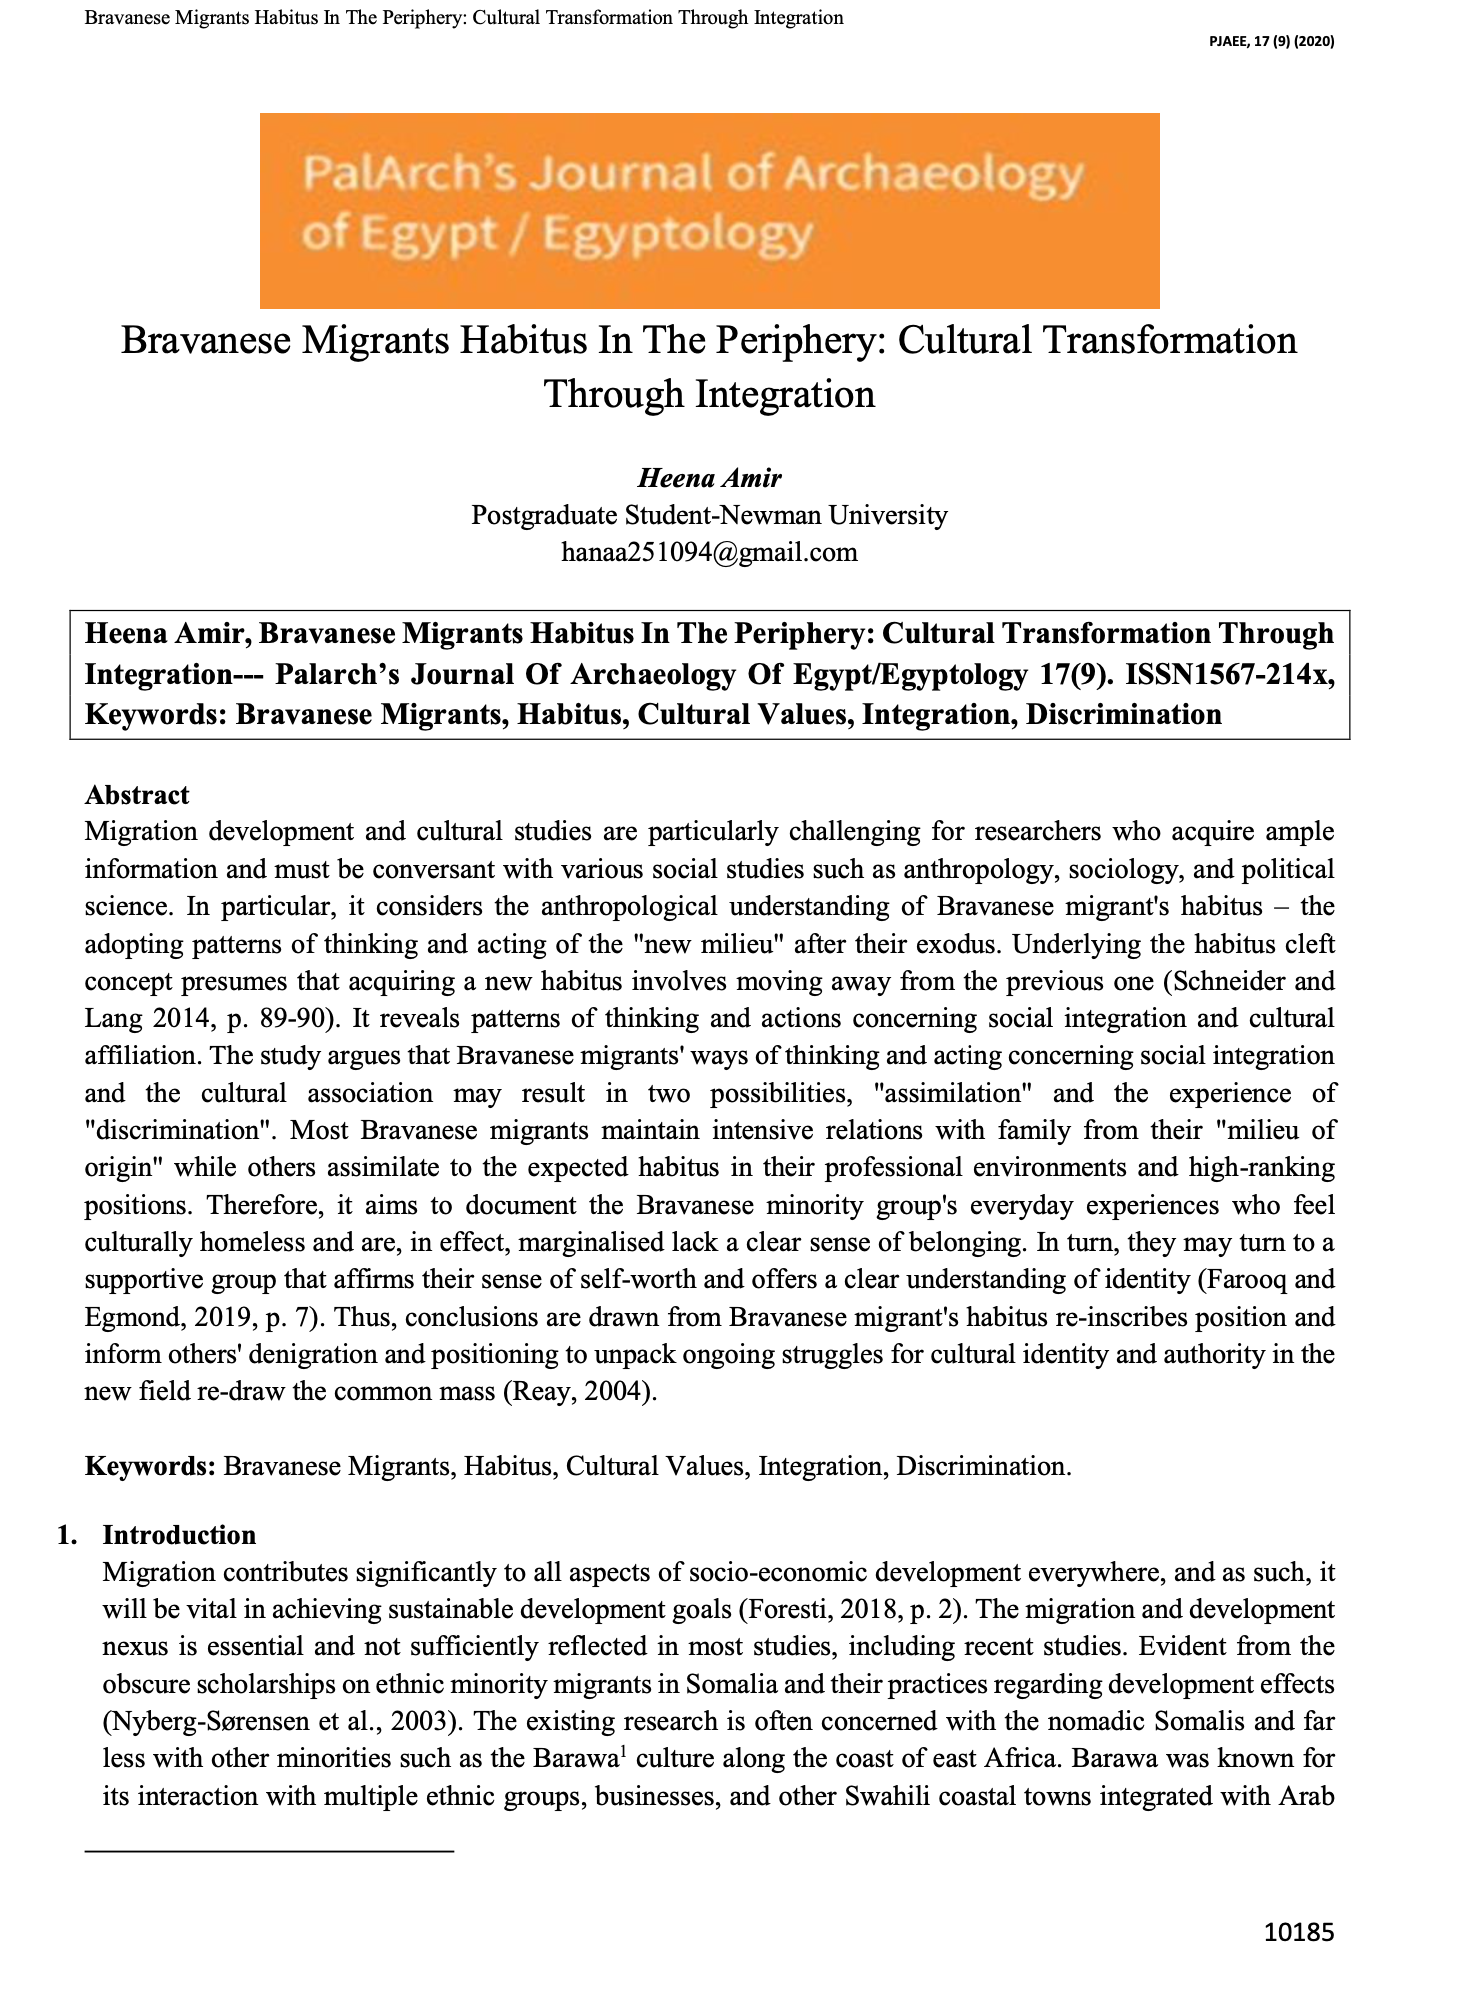 Bravanese Migrants Habitus In the Periphery: Cultural Tranformation through Integration